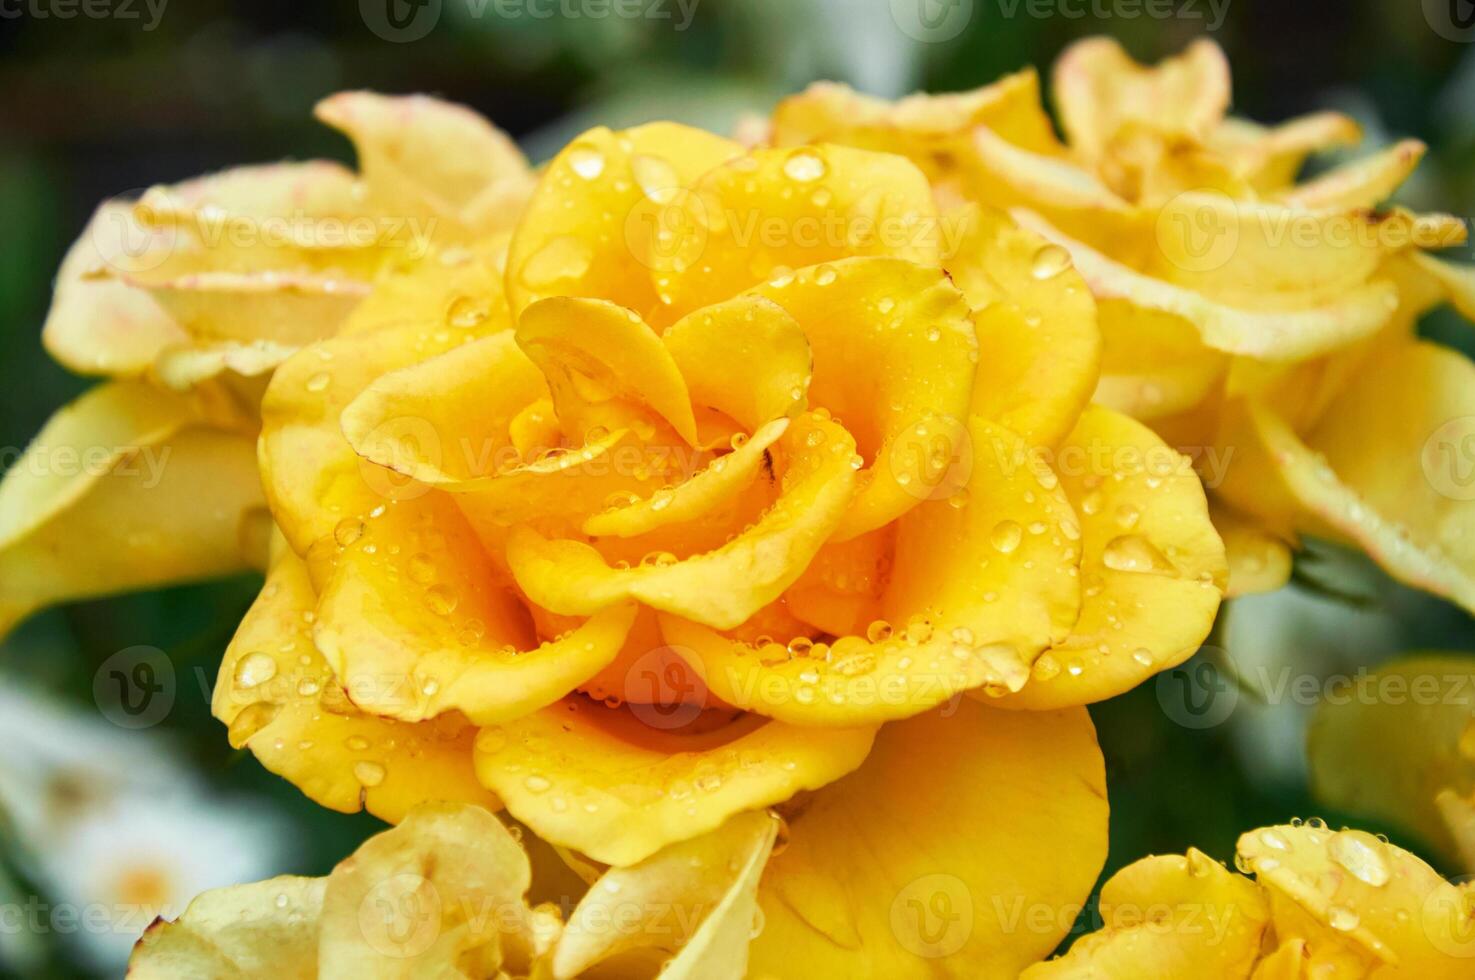 mooi geel rozen detailopname in de tuin foto